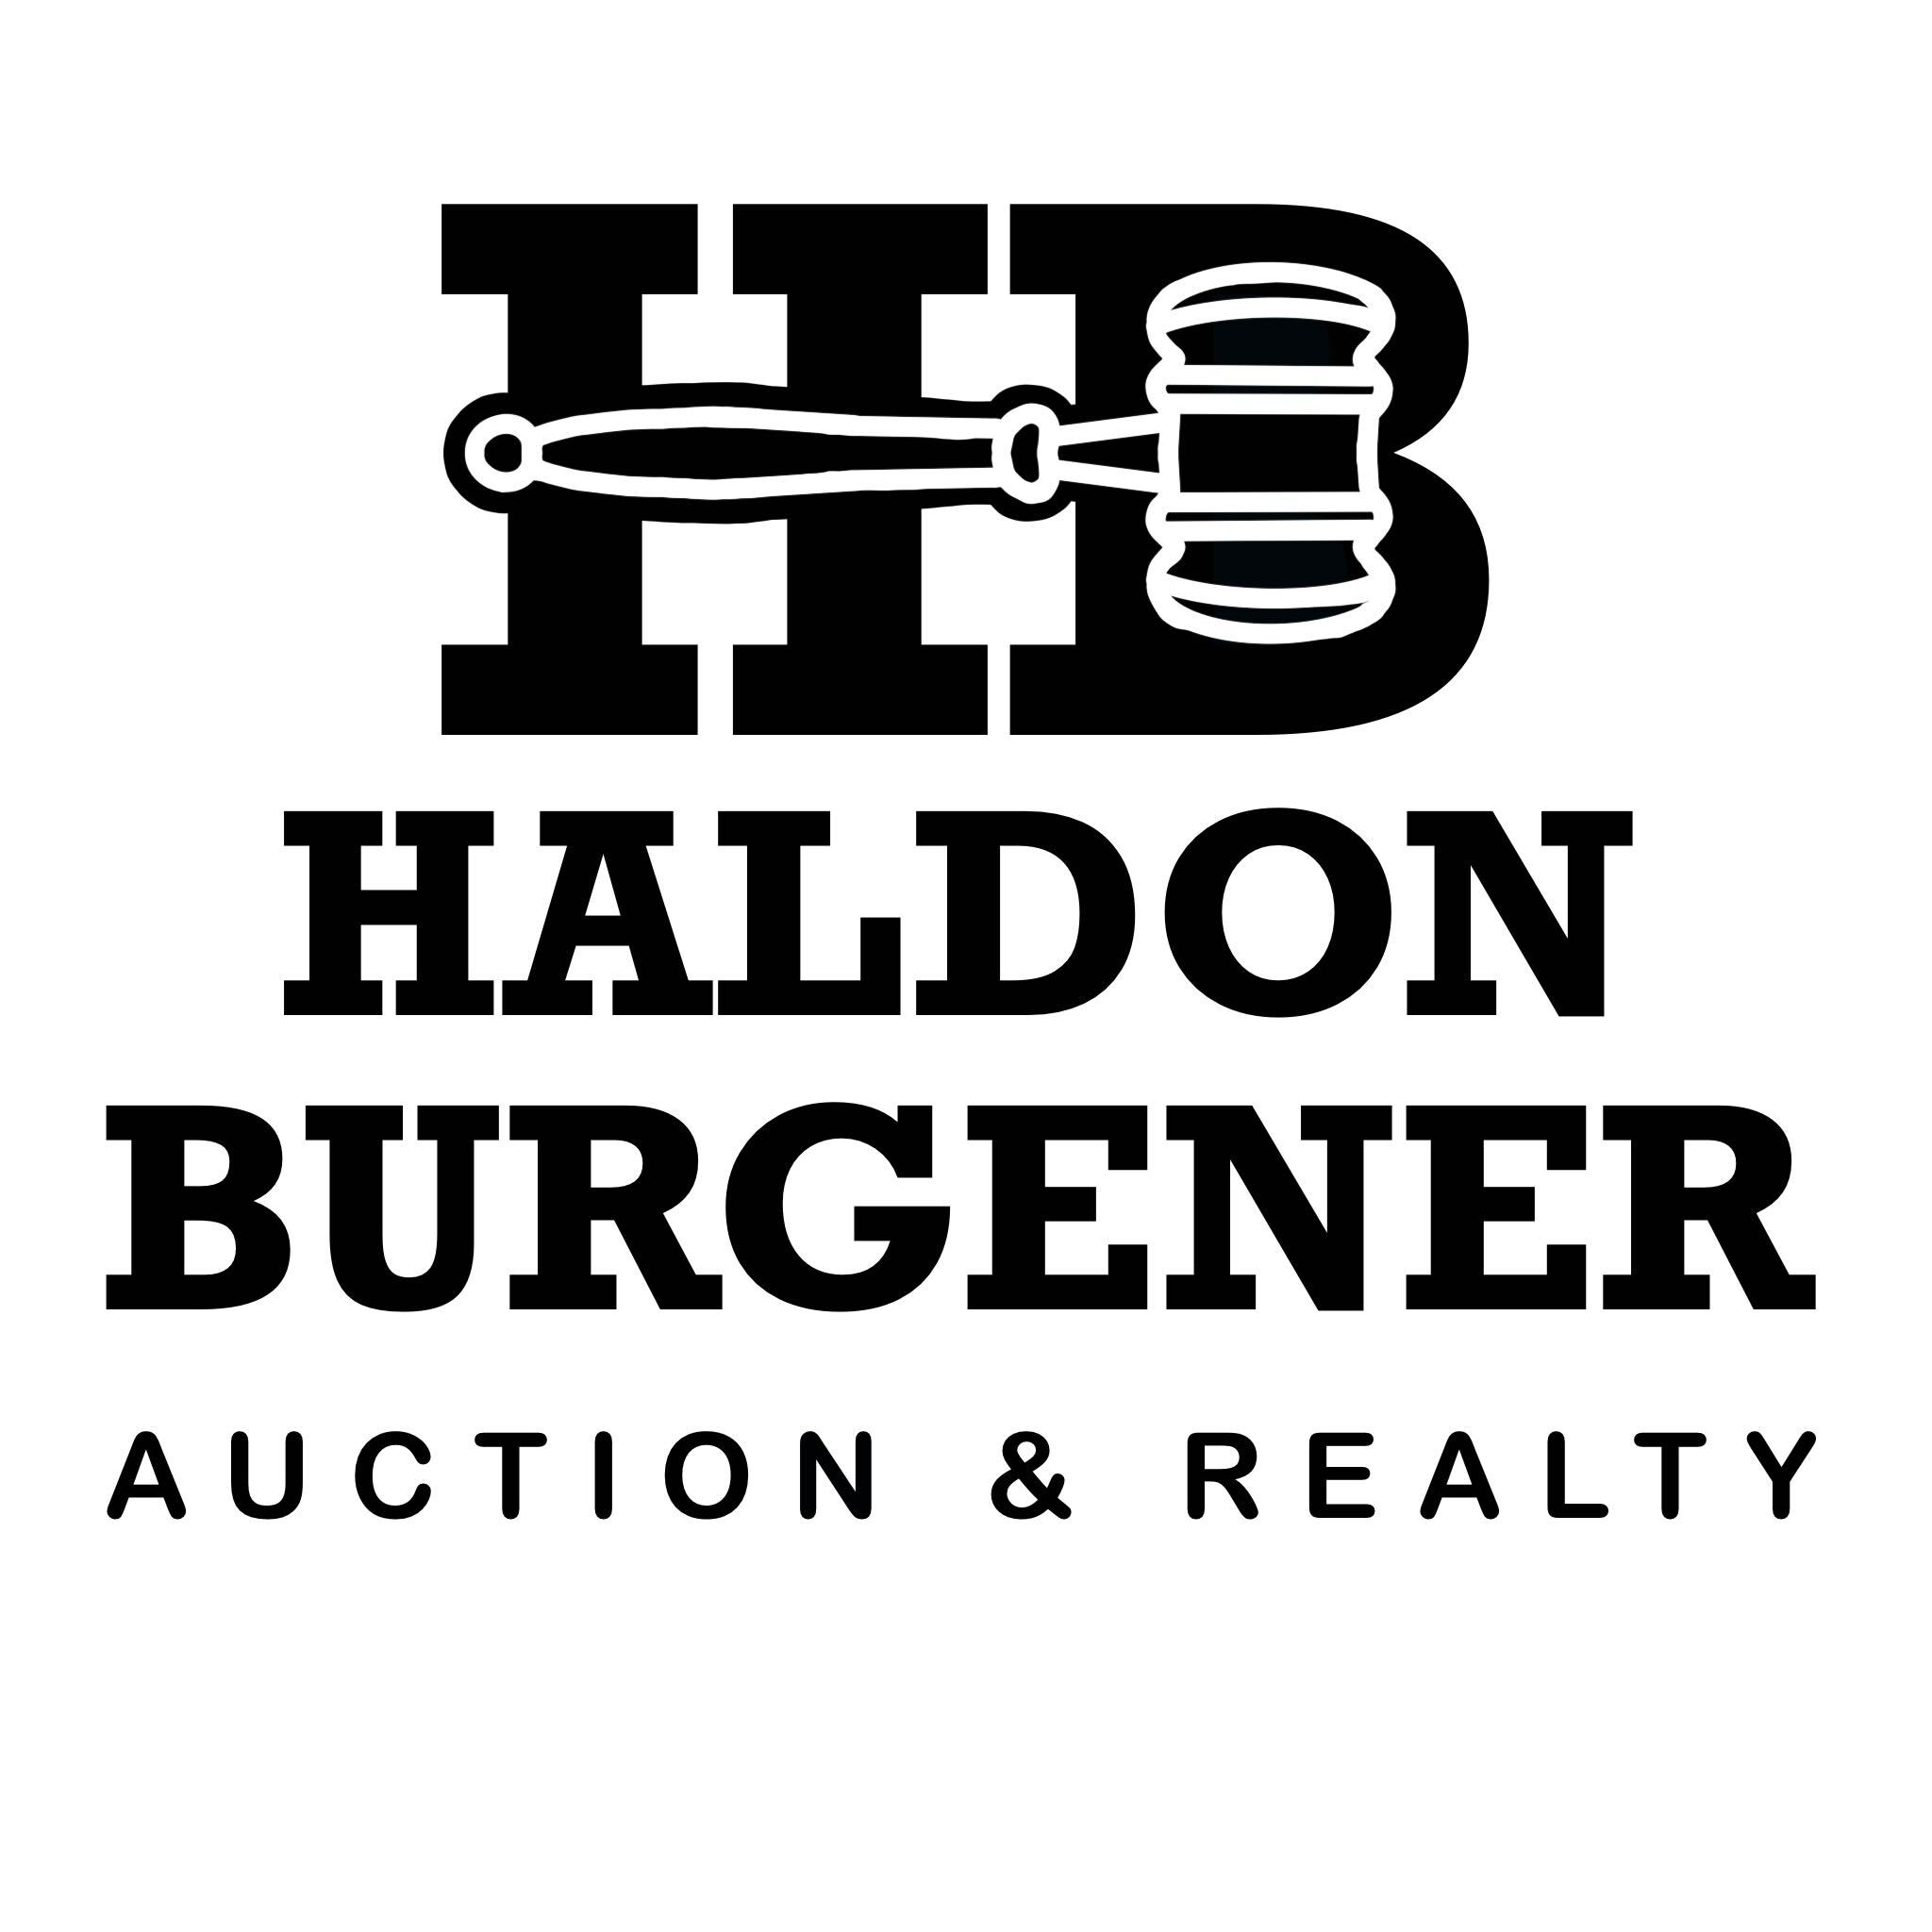 HALDON BURGENER AUCTION REALTY